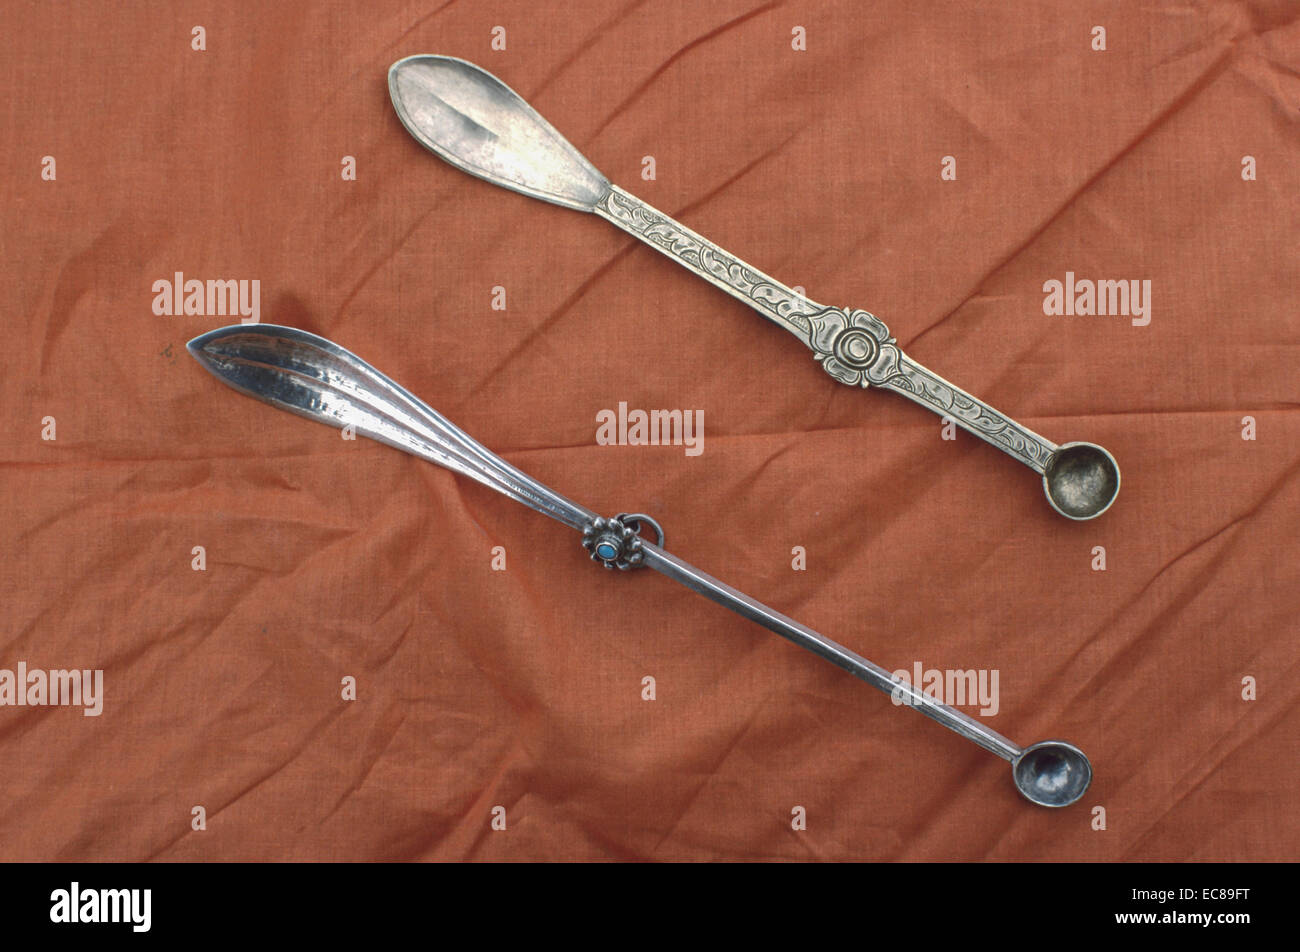 Ladakh silver turquoise stone decorative traditional Tibetan medical measuring instruments medicine spoons Stock Photo